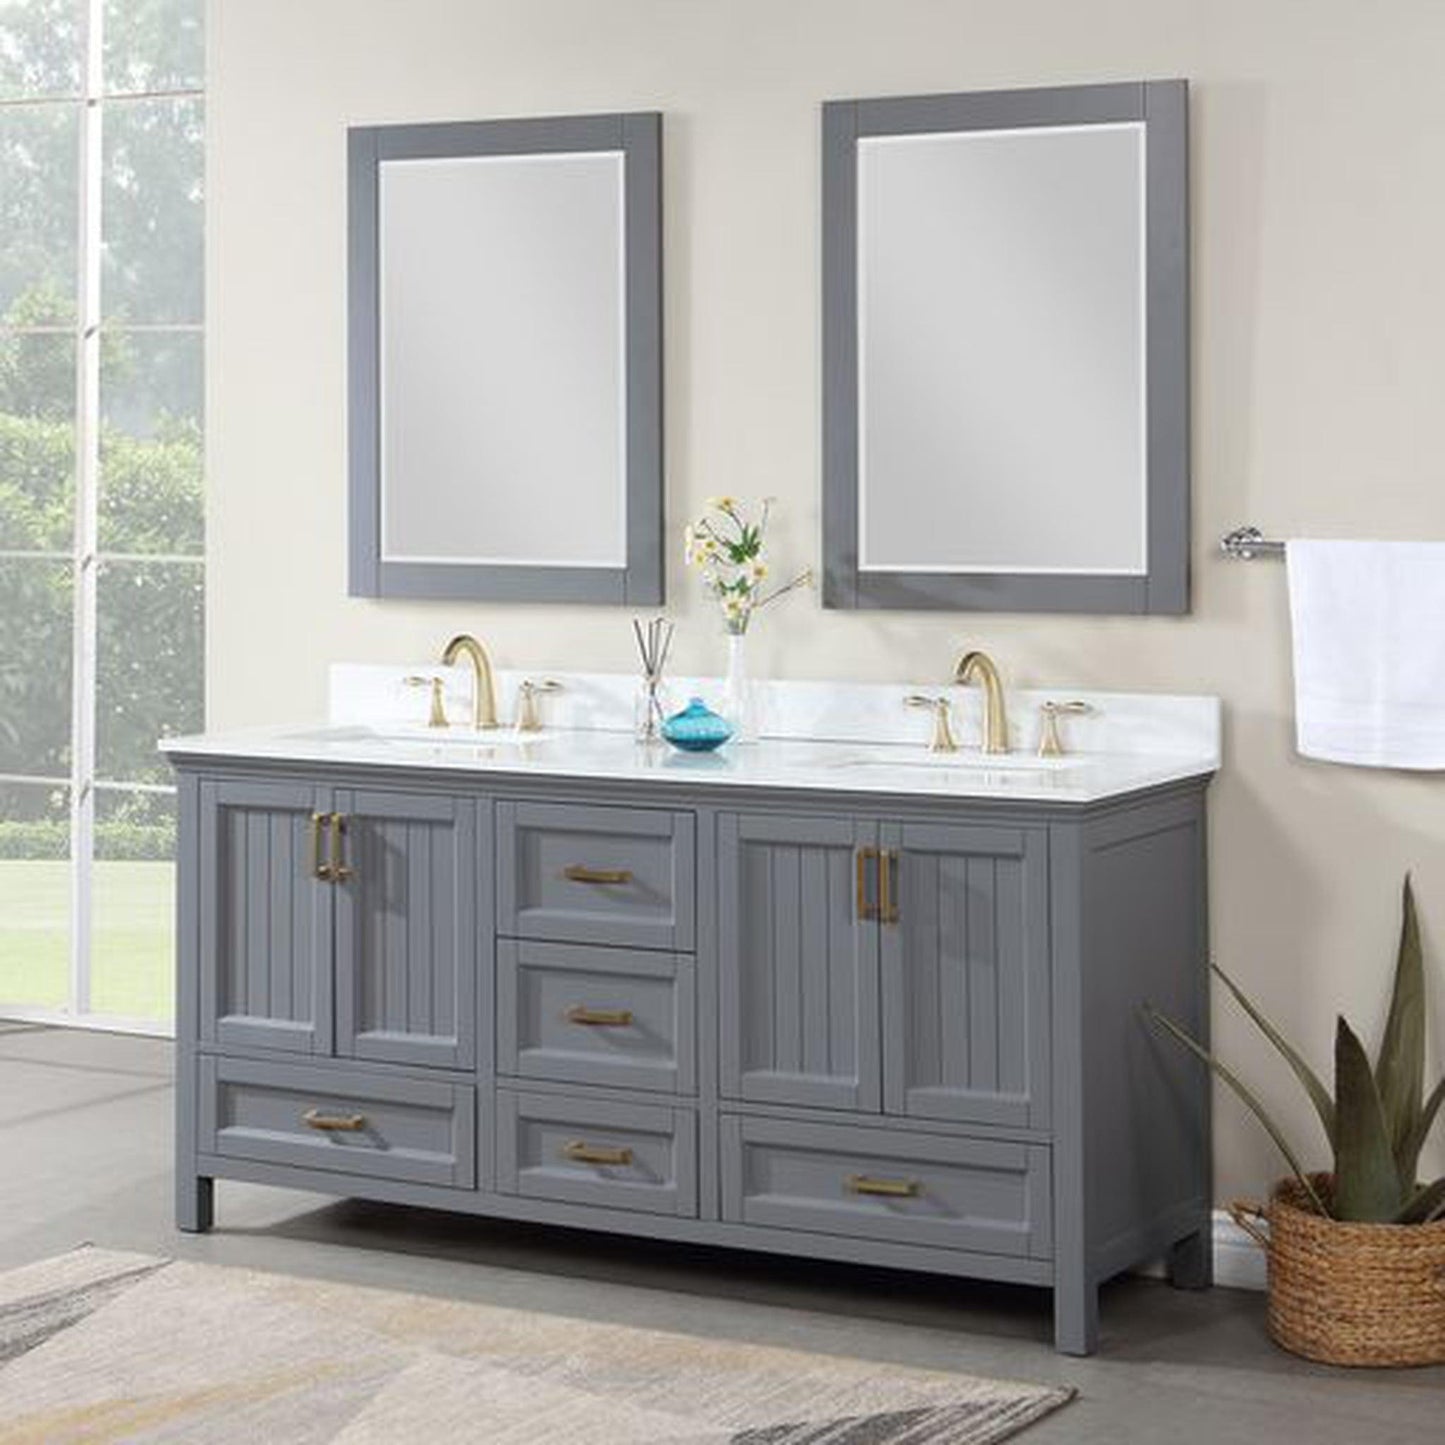 Altair Isla 72" Double Gray Freestanding Bathroom Vanity Set With Mirror, Aosta White Composite Stone Top, Two Rectangular Undermount Ceramic Sinks, and Overflow